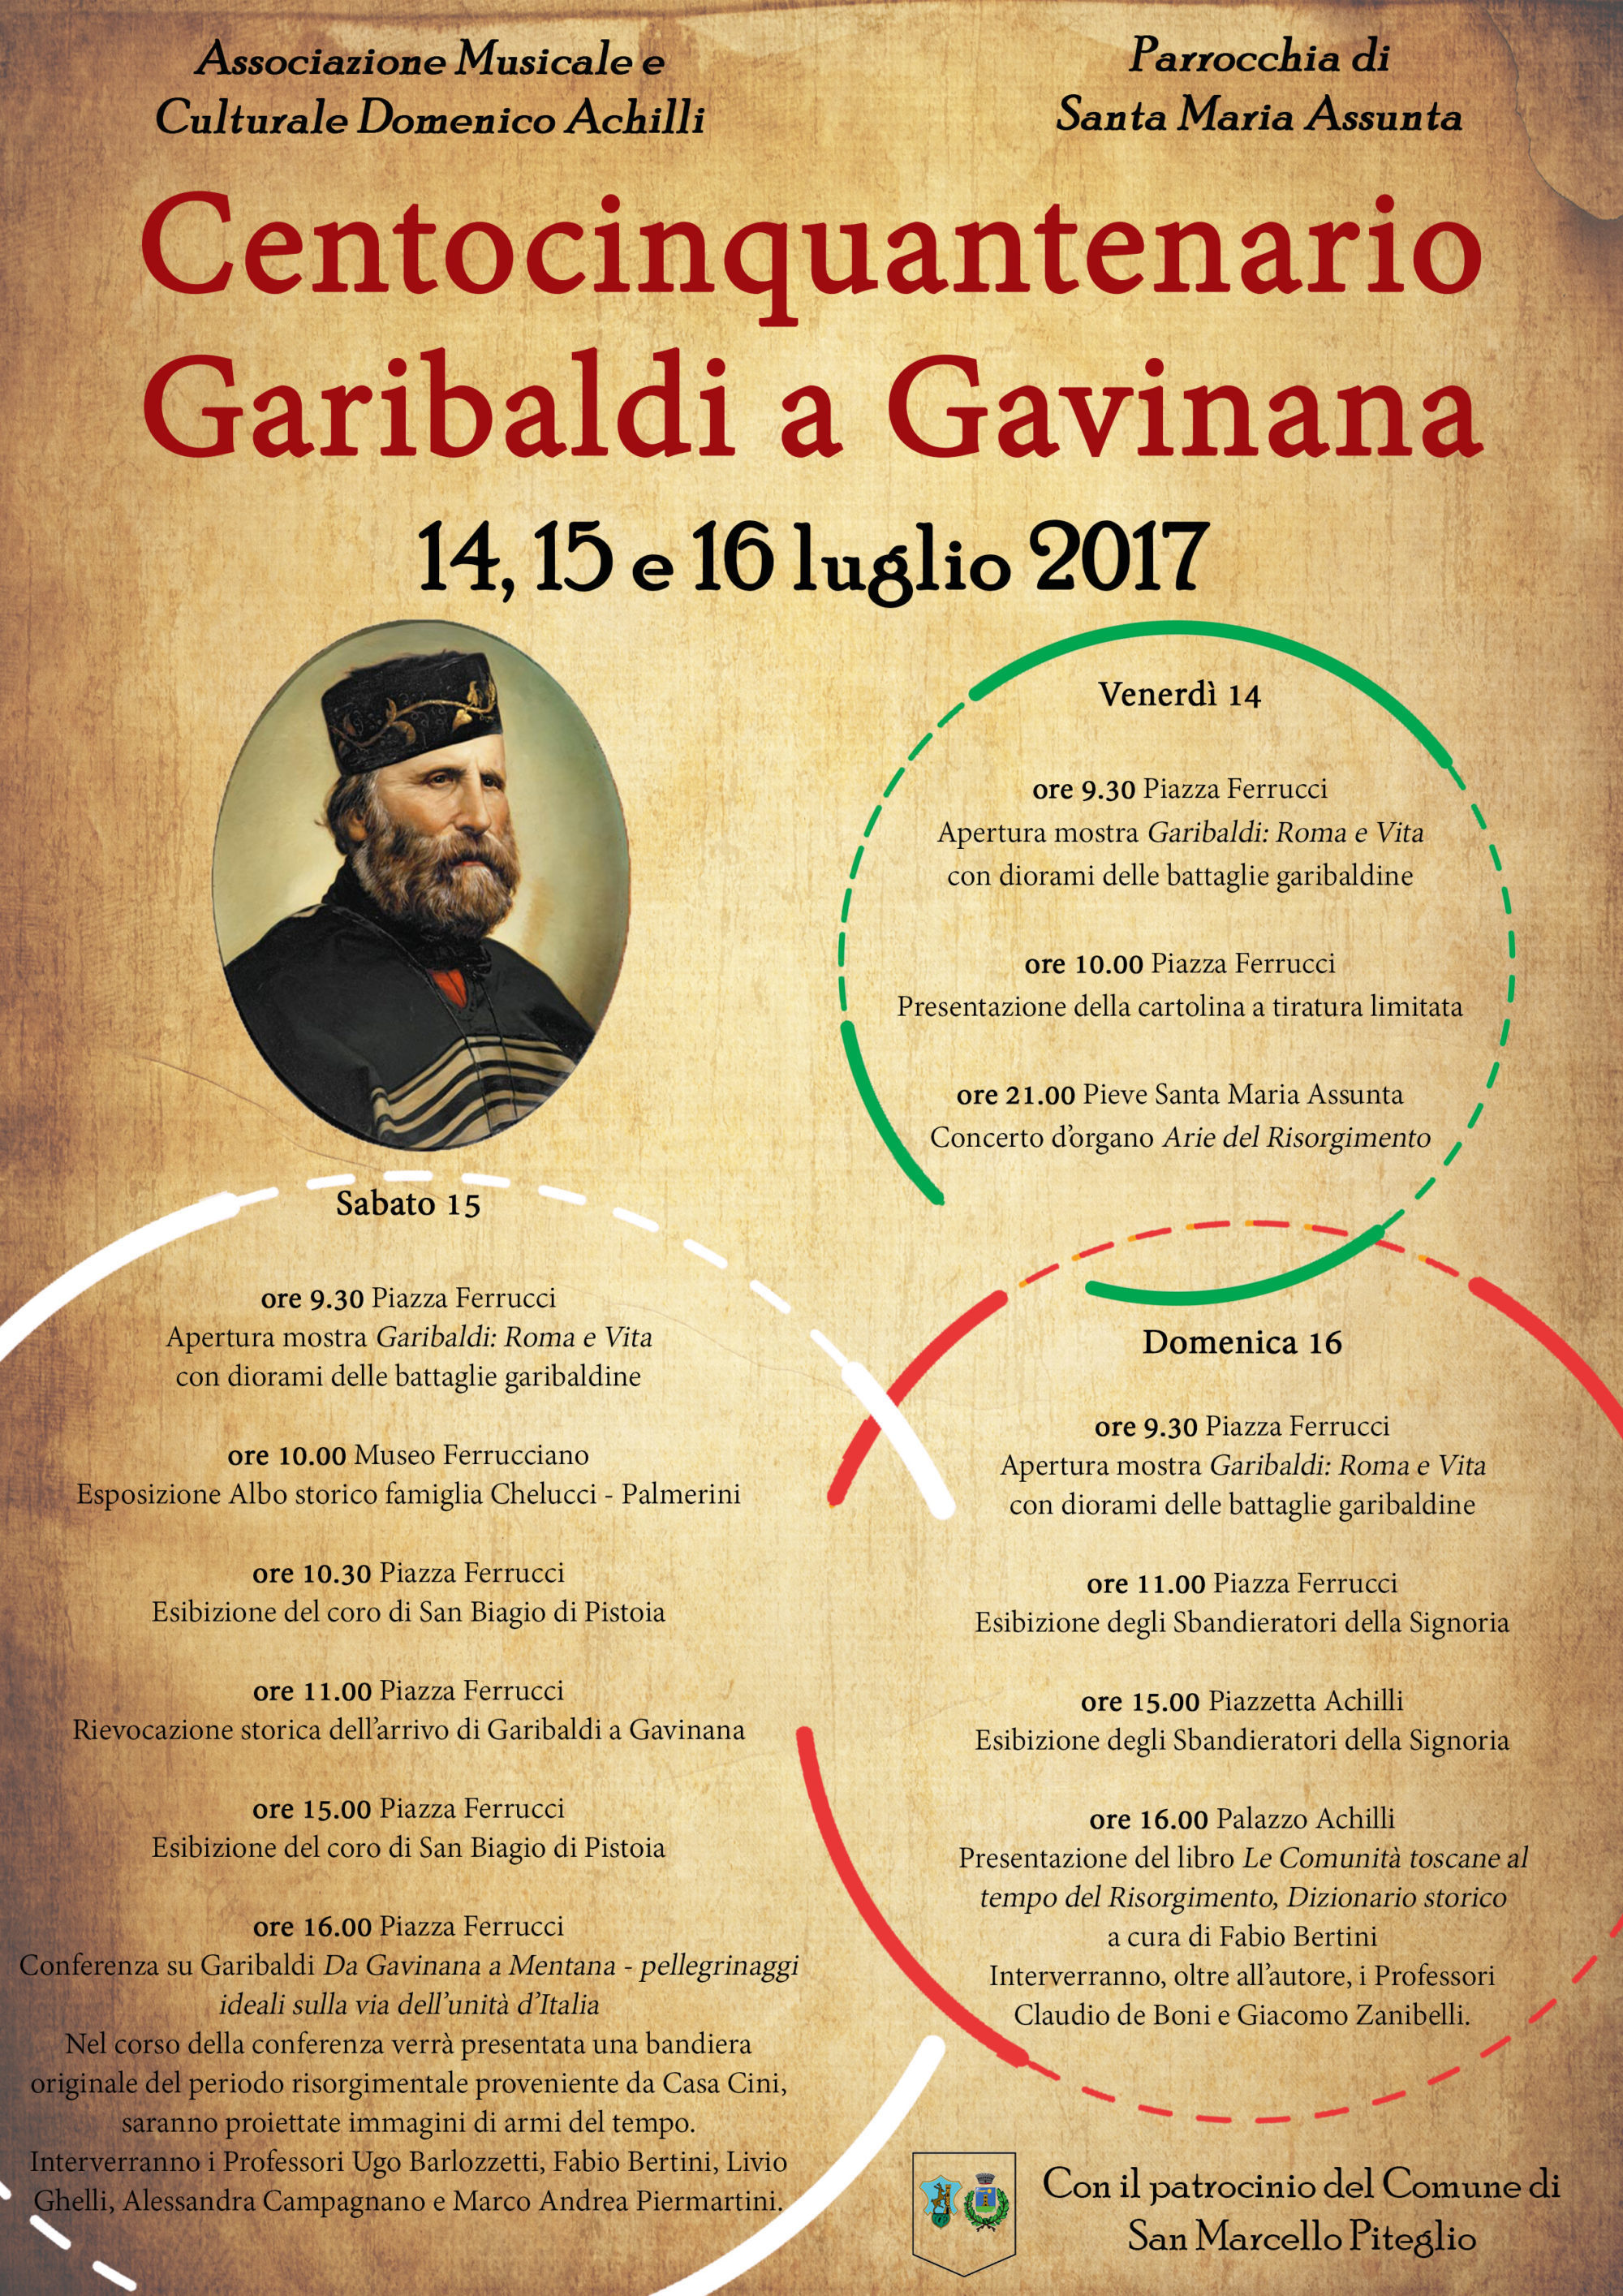 Centocinquantenario di Garibaldi a Gavinana